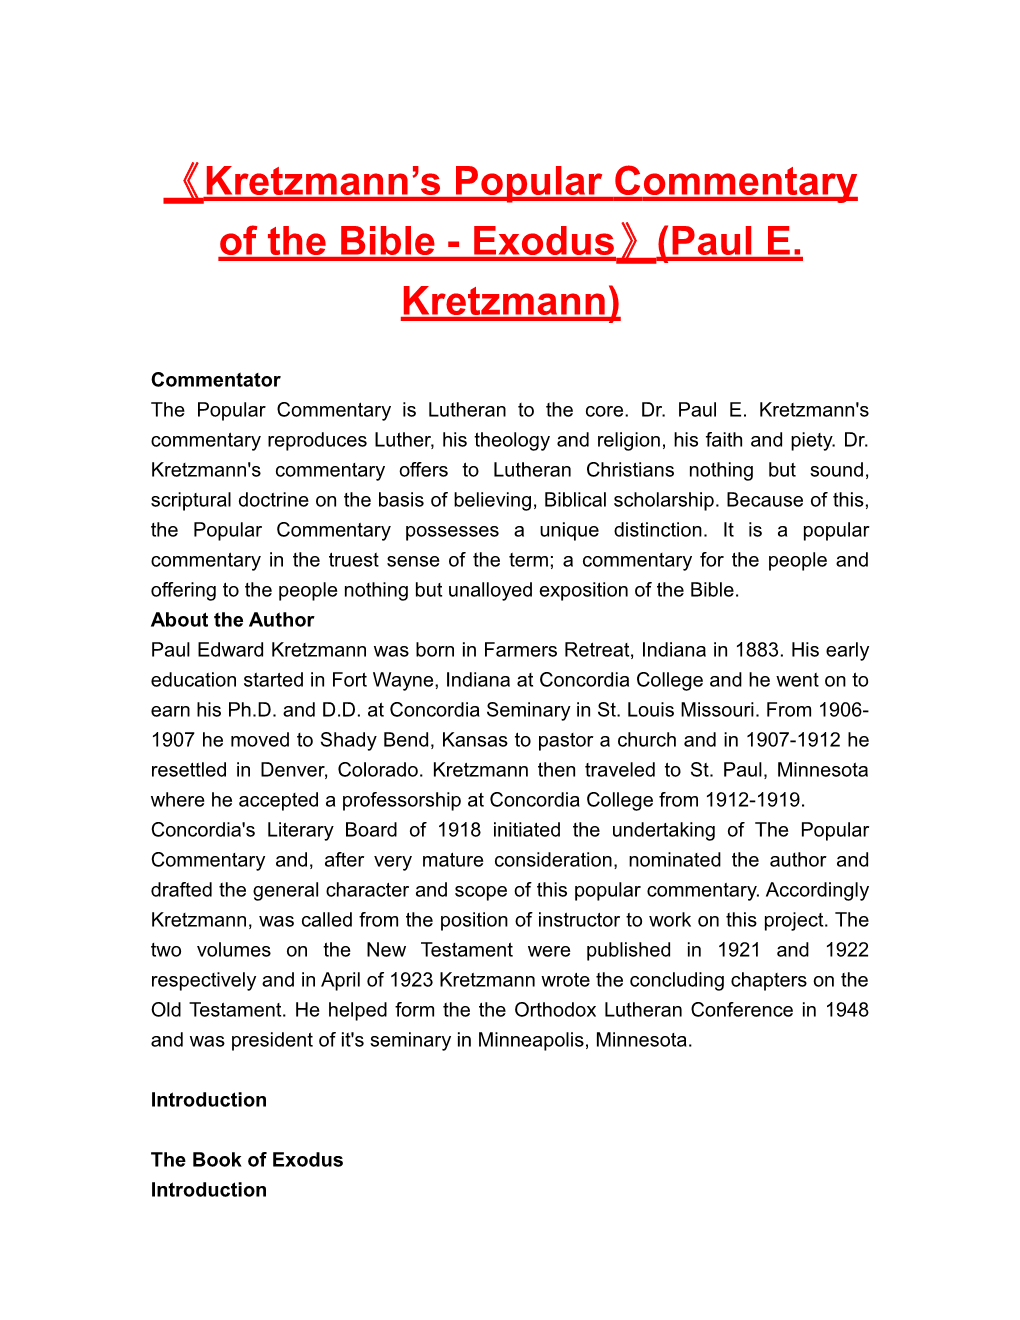 Kretzmann S Popularcommentary of the Bible-Exodus (Paul E. Kretzmann)